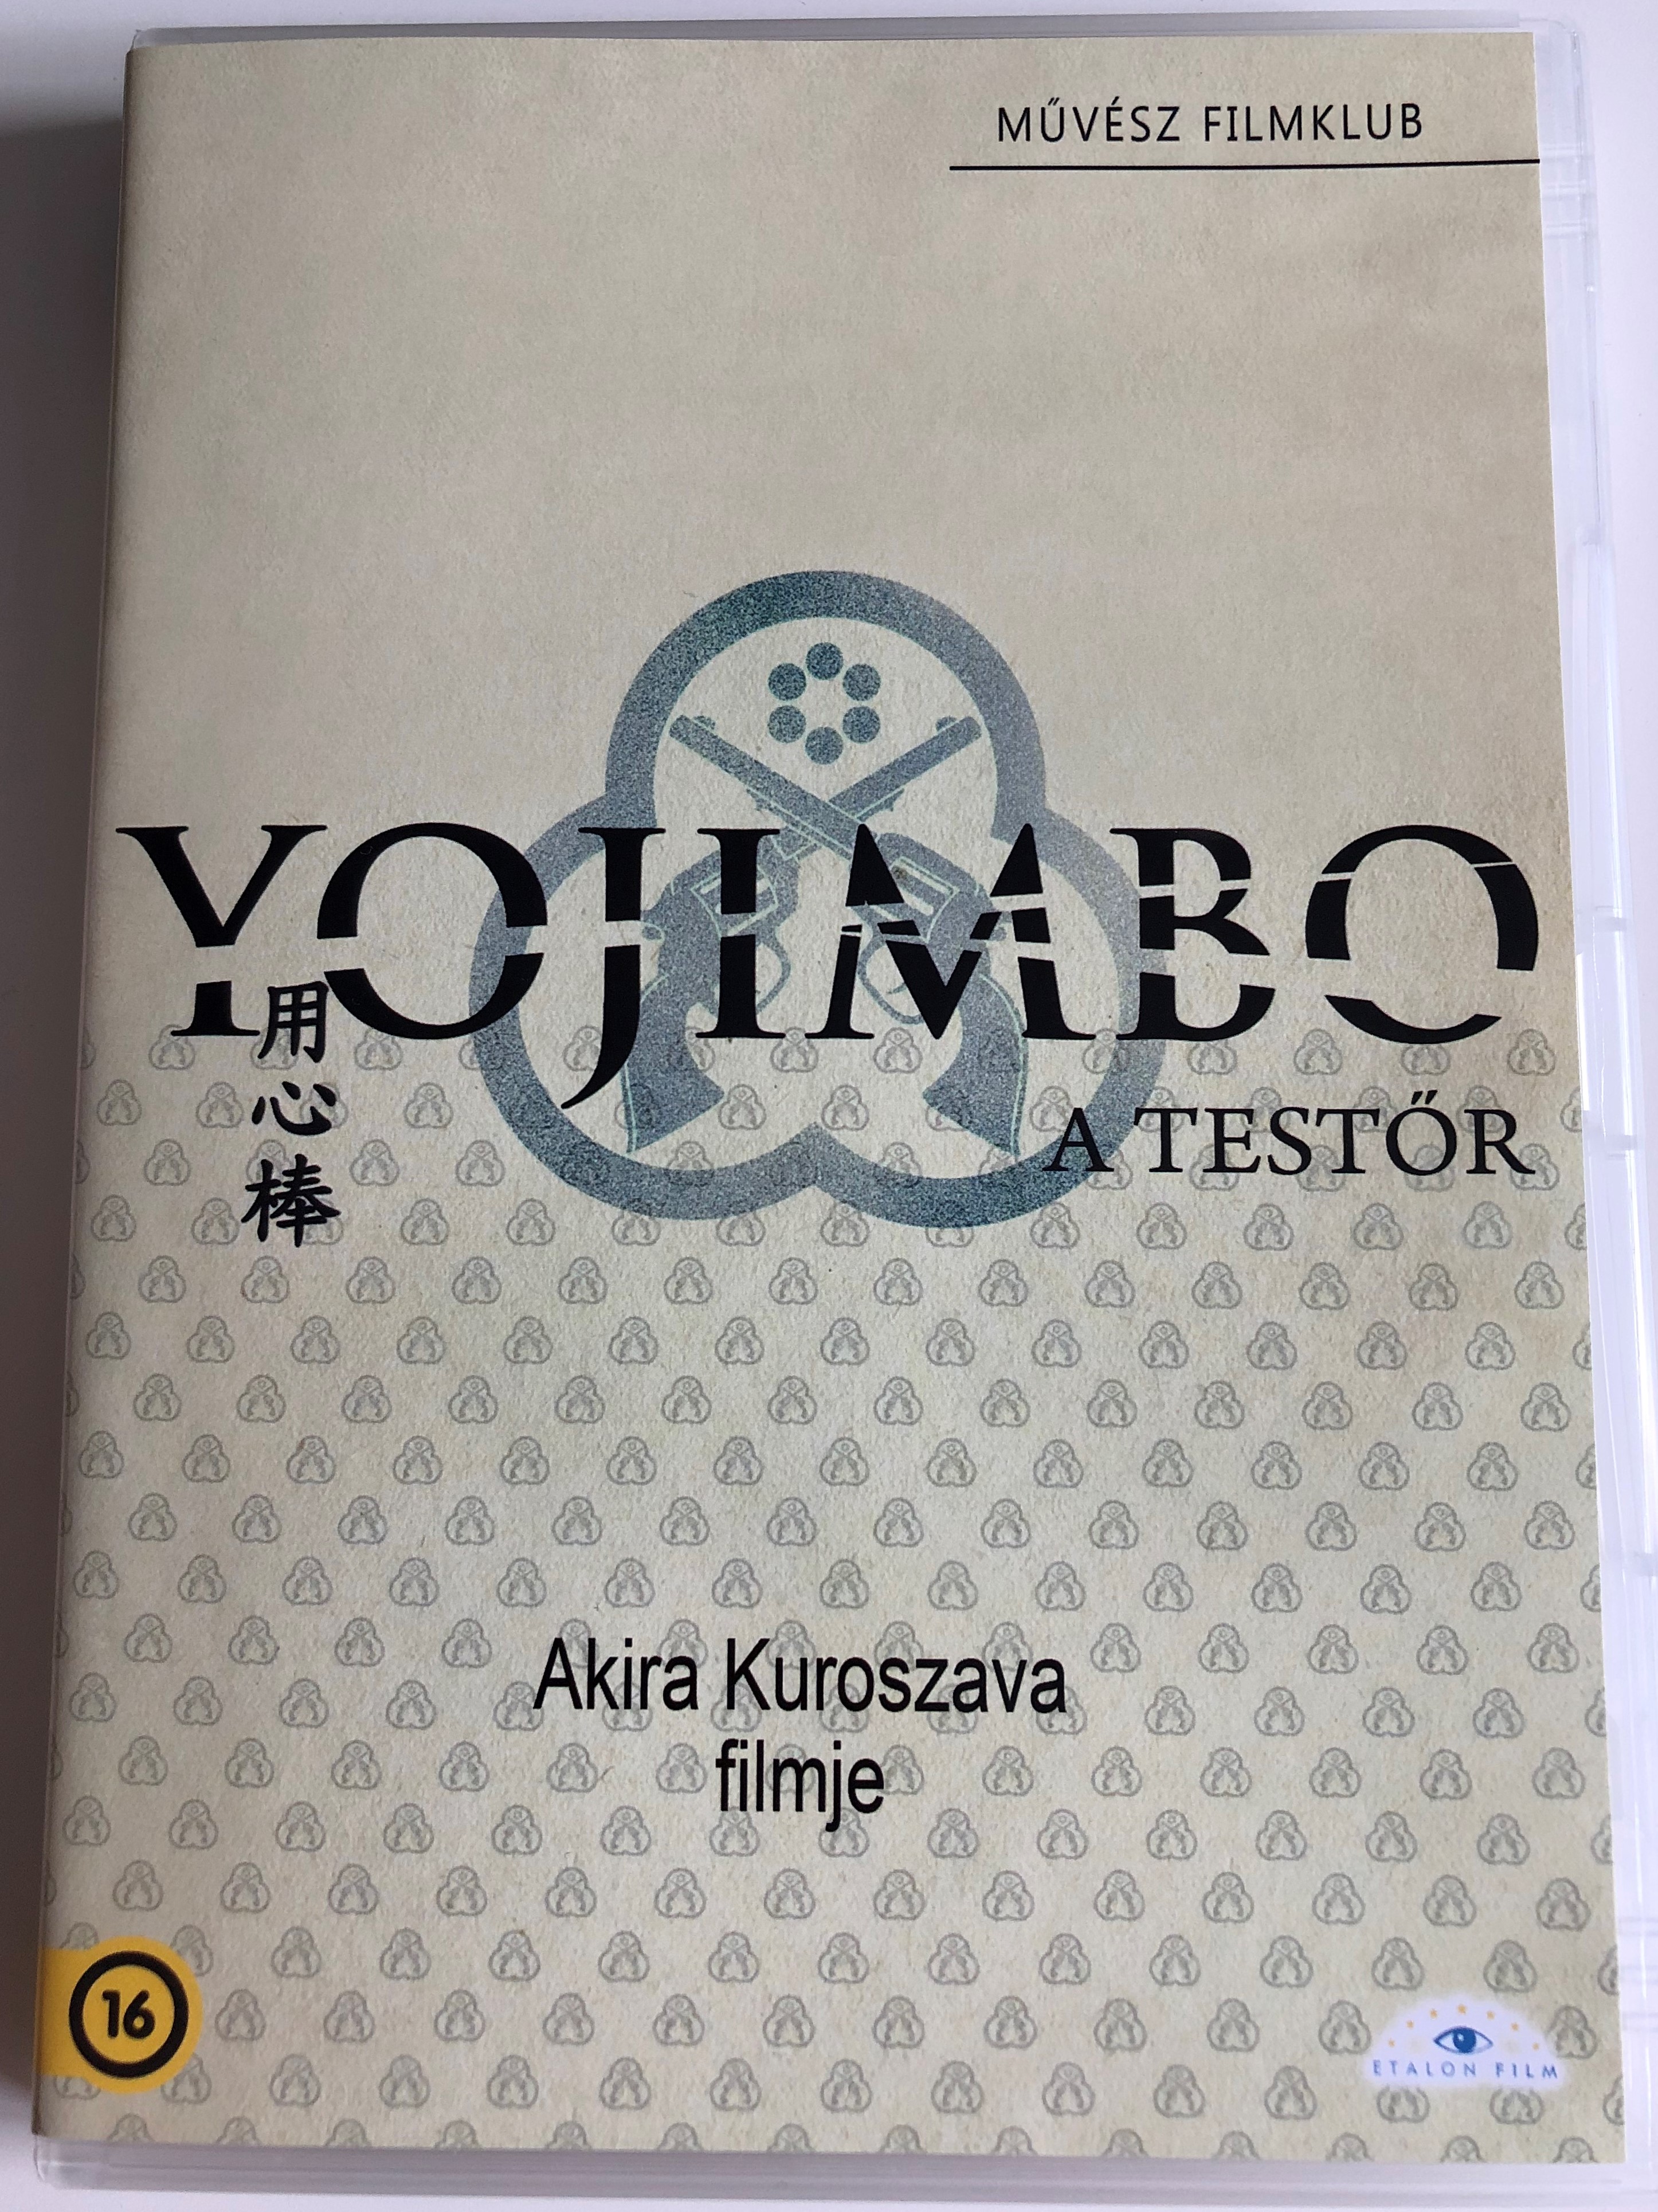 yojimbo-dvd-1961-a-test-r-directed-by-akira-kurosawa-starring-toshiro-mifune-tatsuya-nakadai-yoko-tsukasa-isuzu-yamada-daisuke-kat-takashi-shimura-kamatari-fujiwara-atsushi-watanabe-1-.jpg